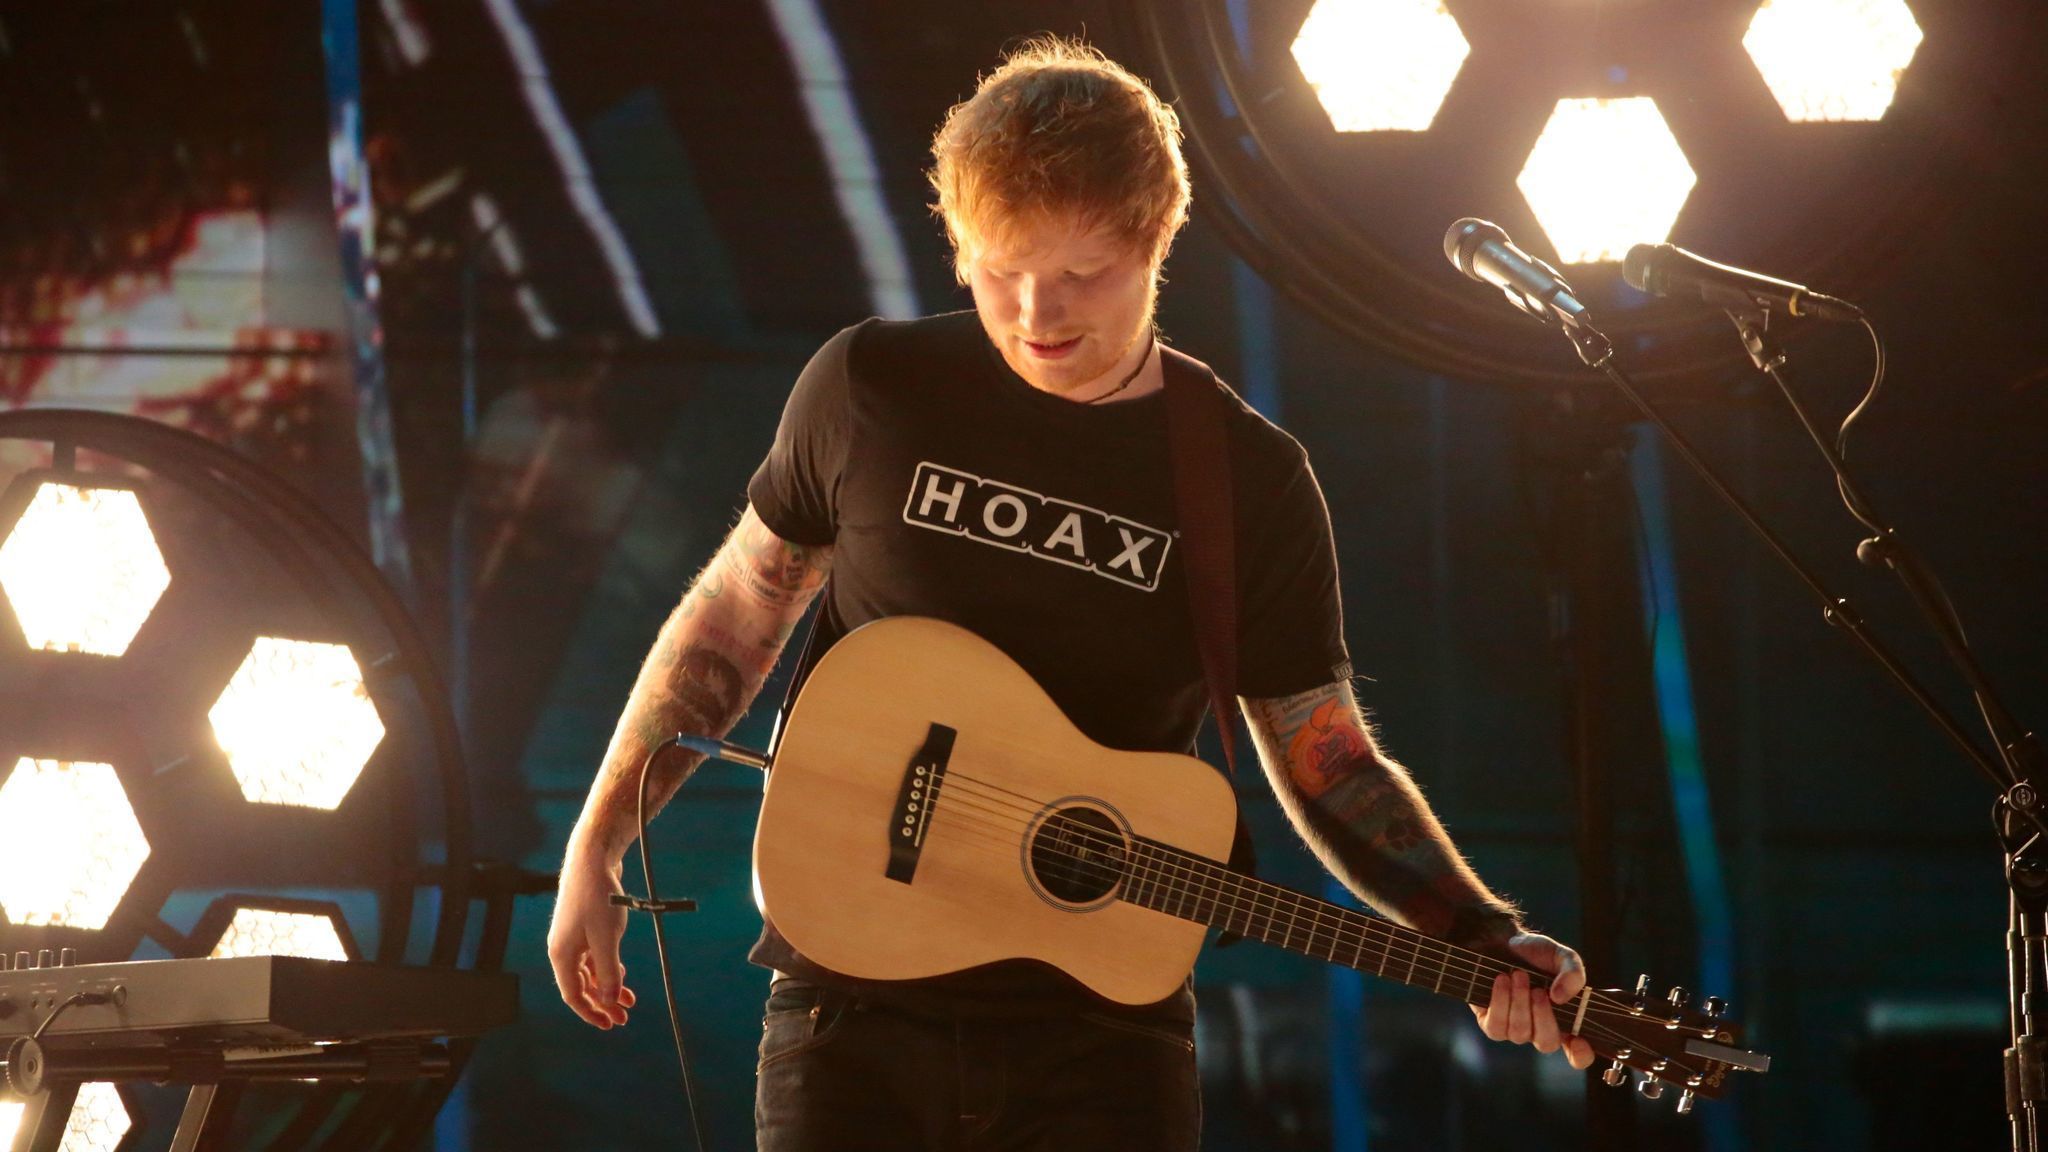 Singer Ed Sheeran illuminates his struggle with substance abuse - LA Times2048 x 1152